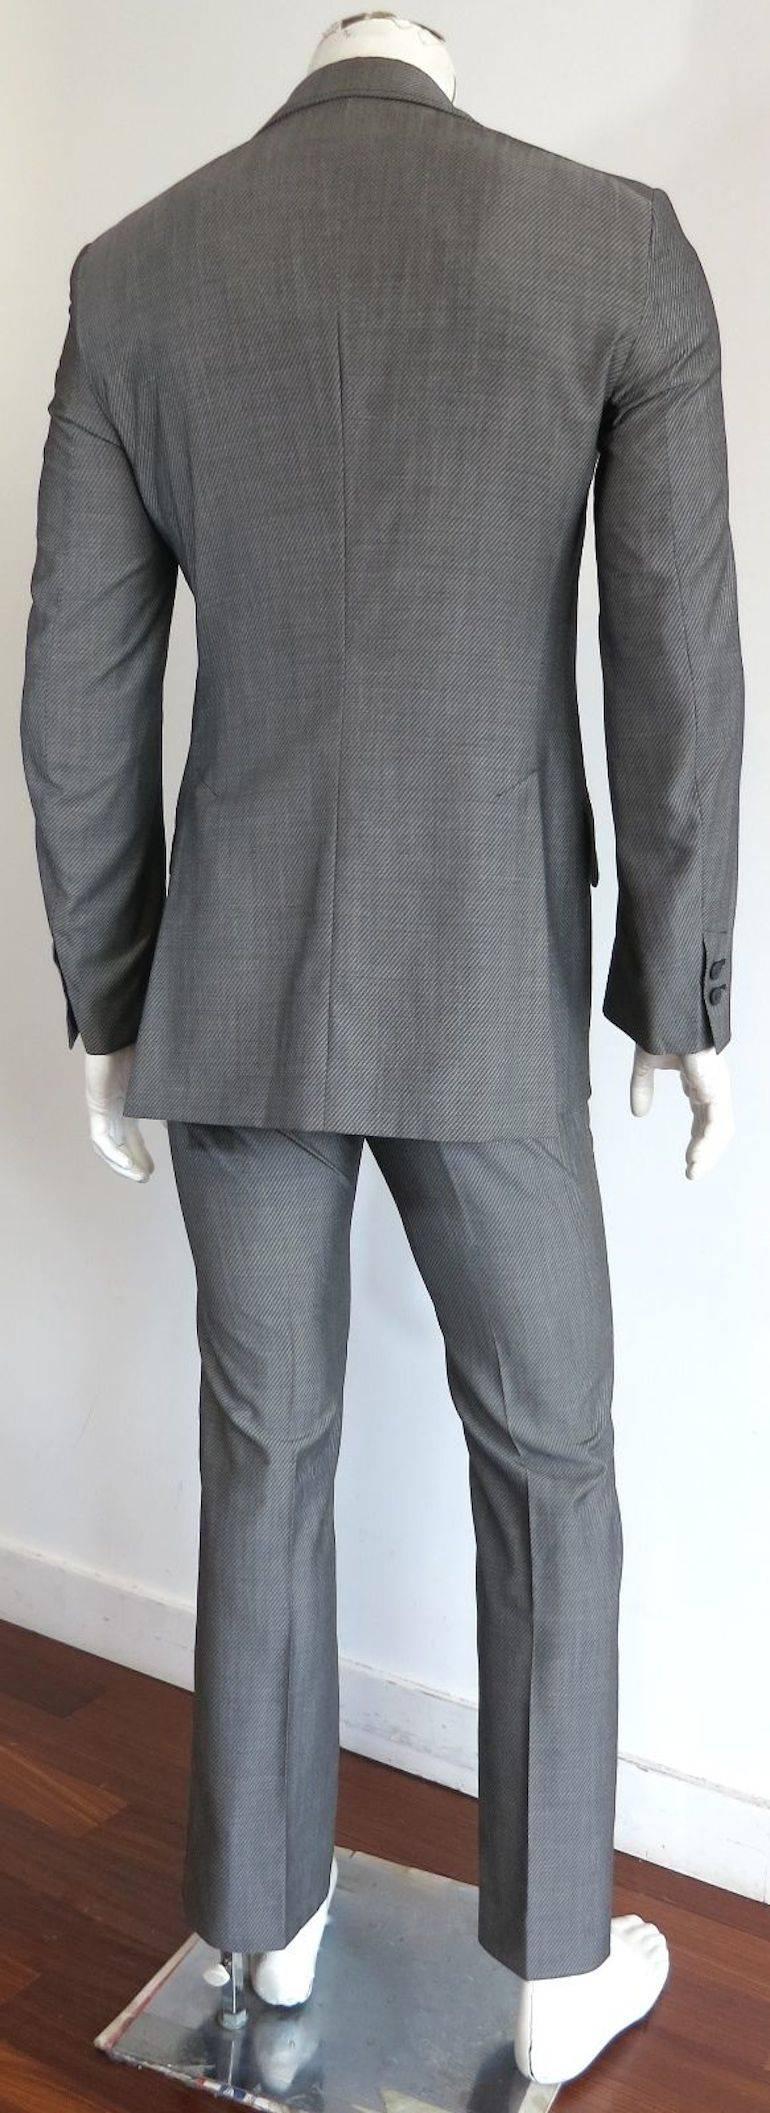 VIVIENNE WESTWOOD MAN LONDON Wool mohair twill weave suit 1